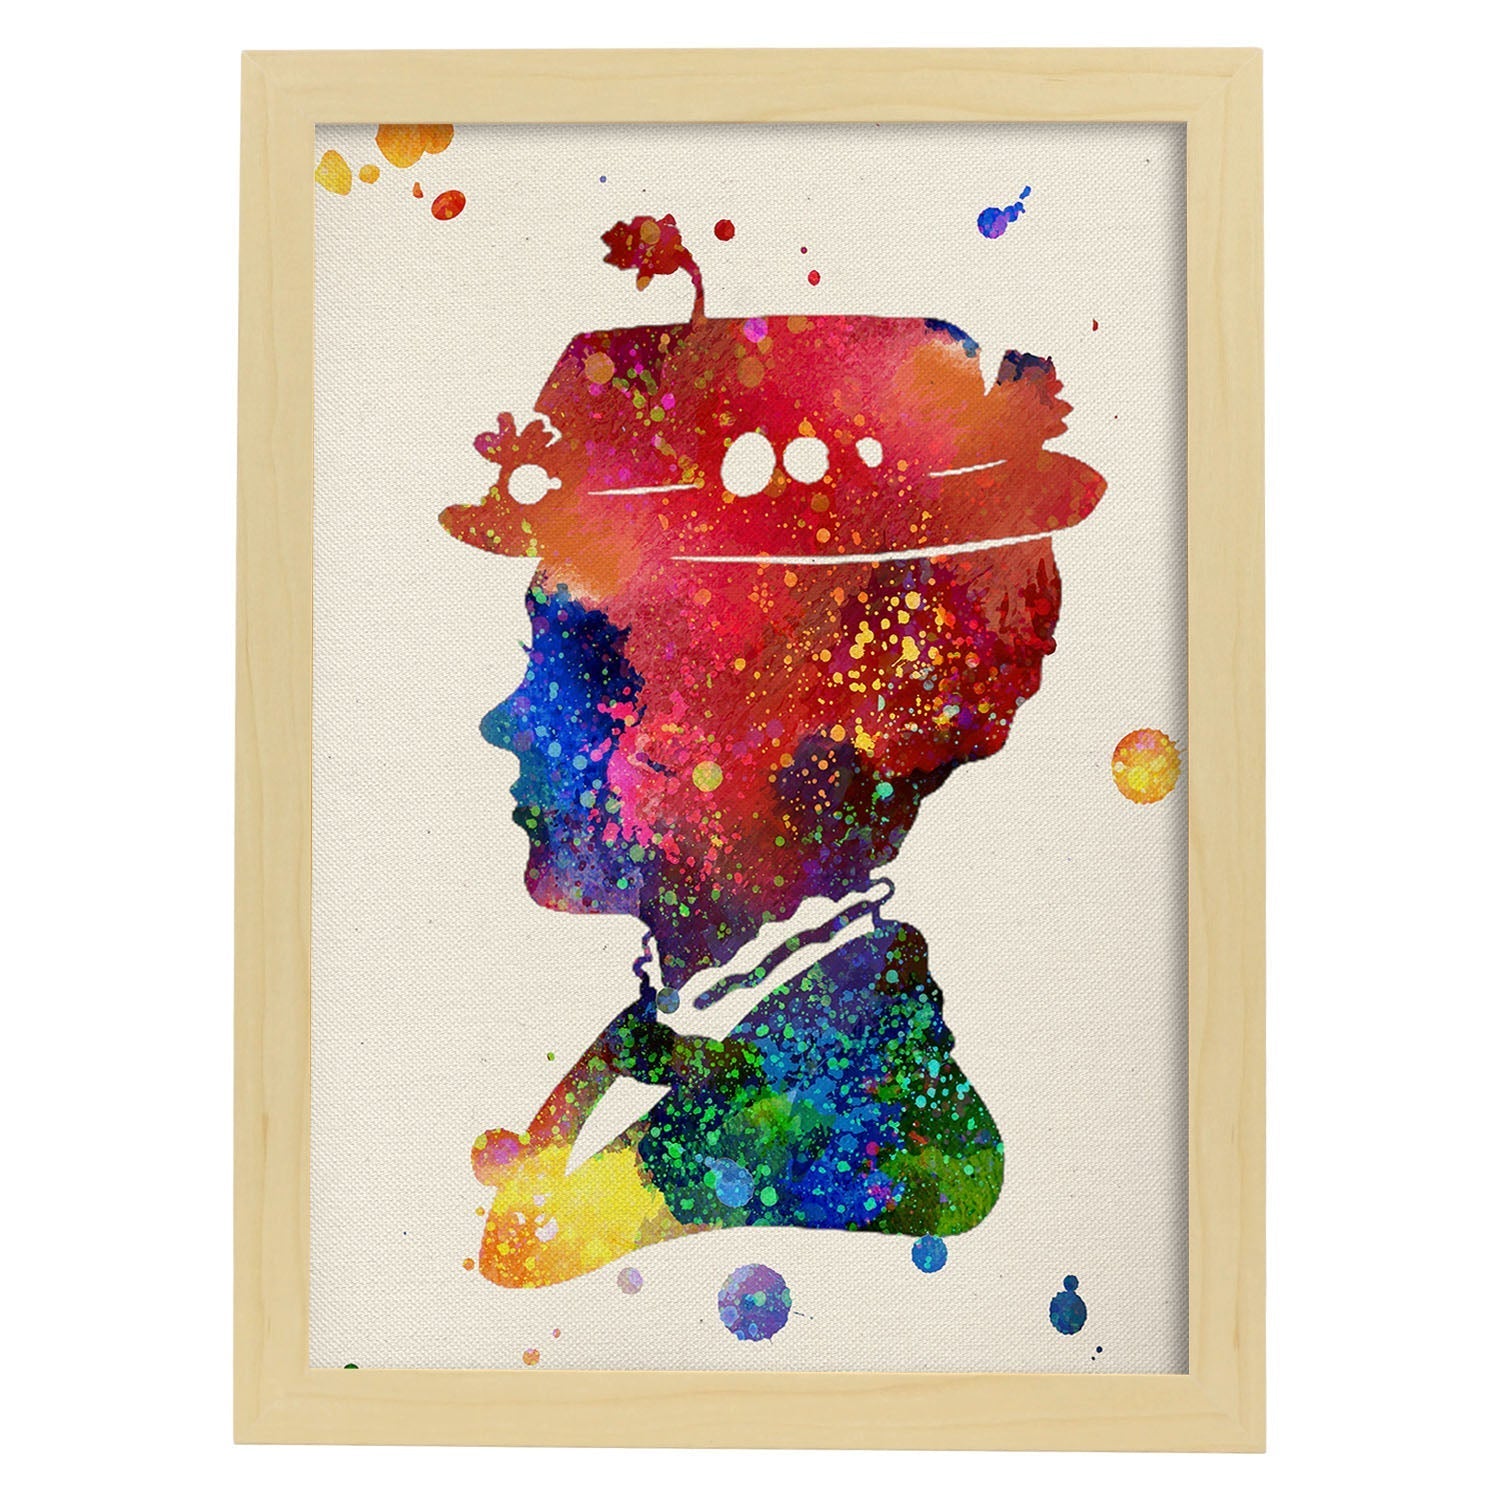 Lámina de la famosa pelicula Mary Poppins (perfil) en Poster estilo explosión de color .-Artwork-Nacnic-A4-Marco Madera clara-Nacnic Estudio SL